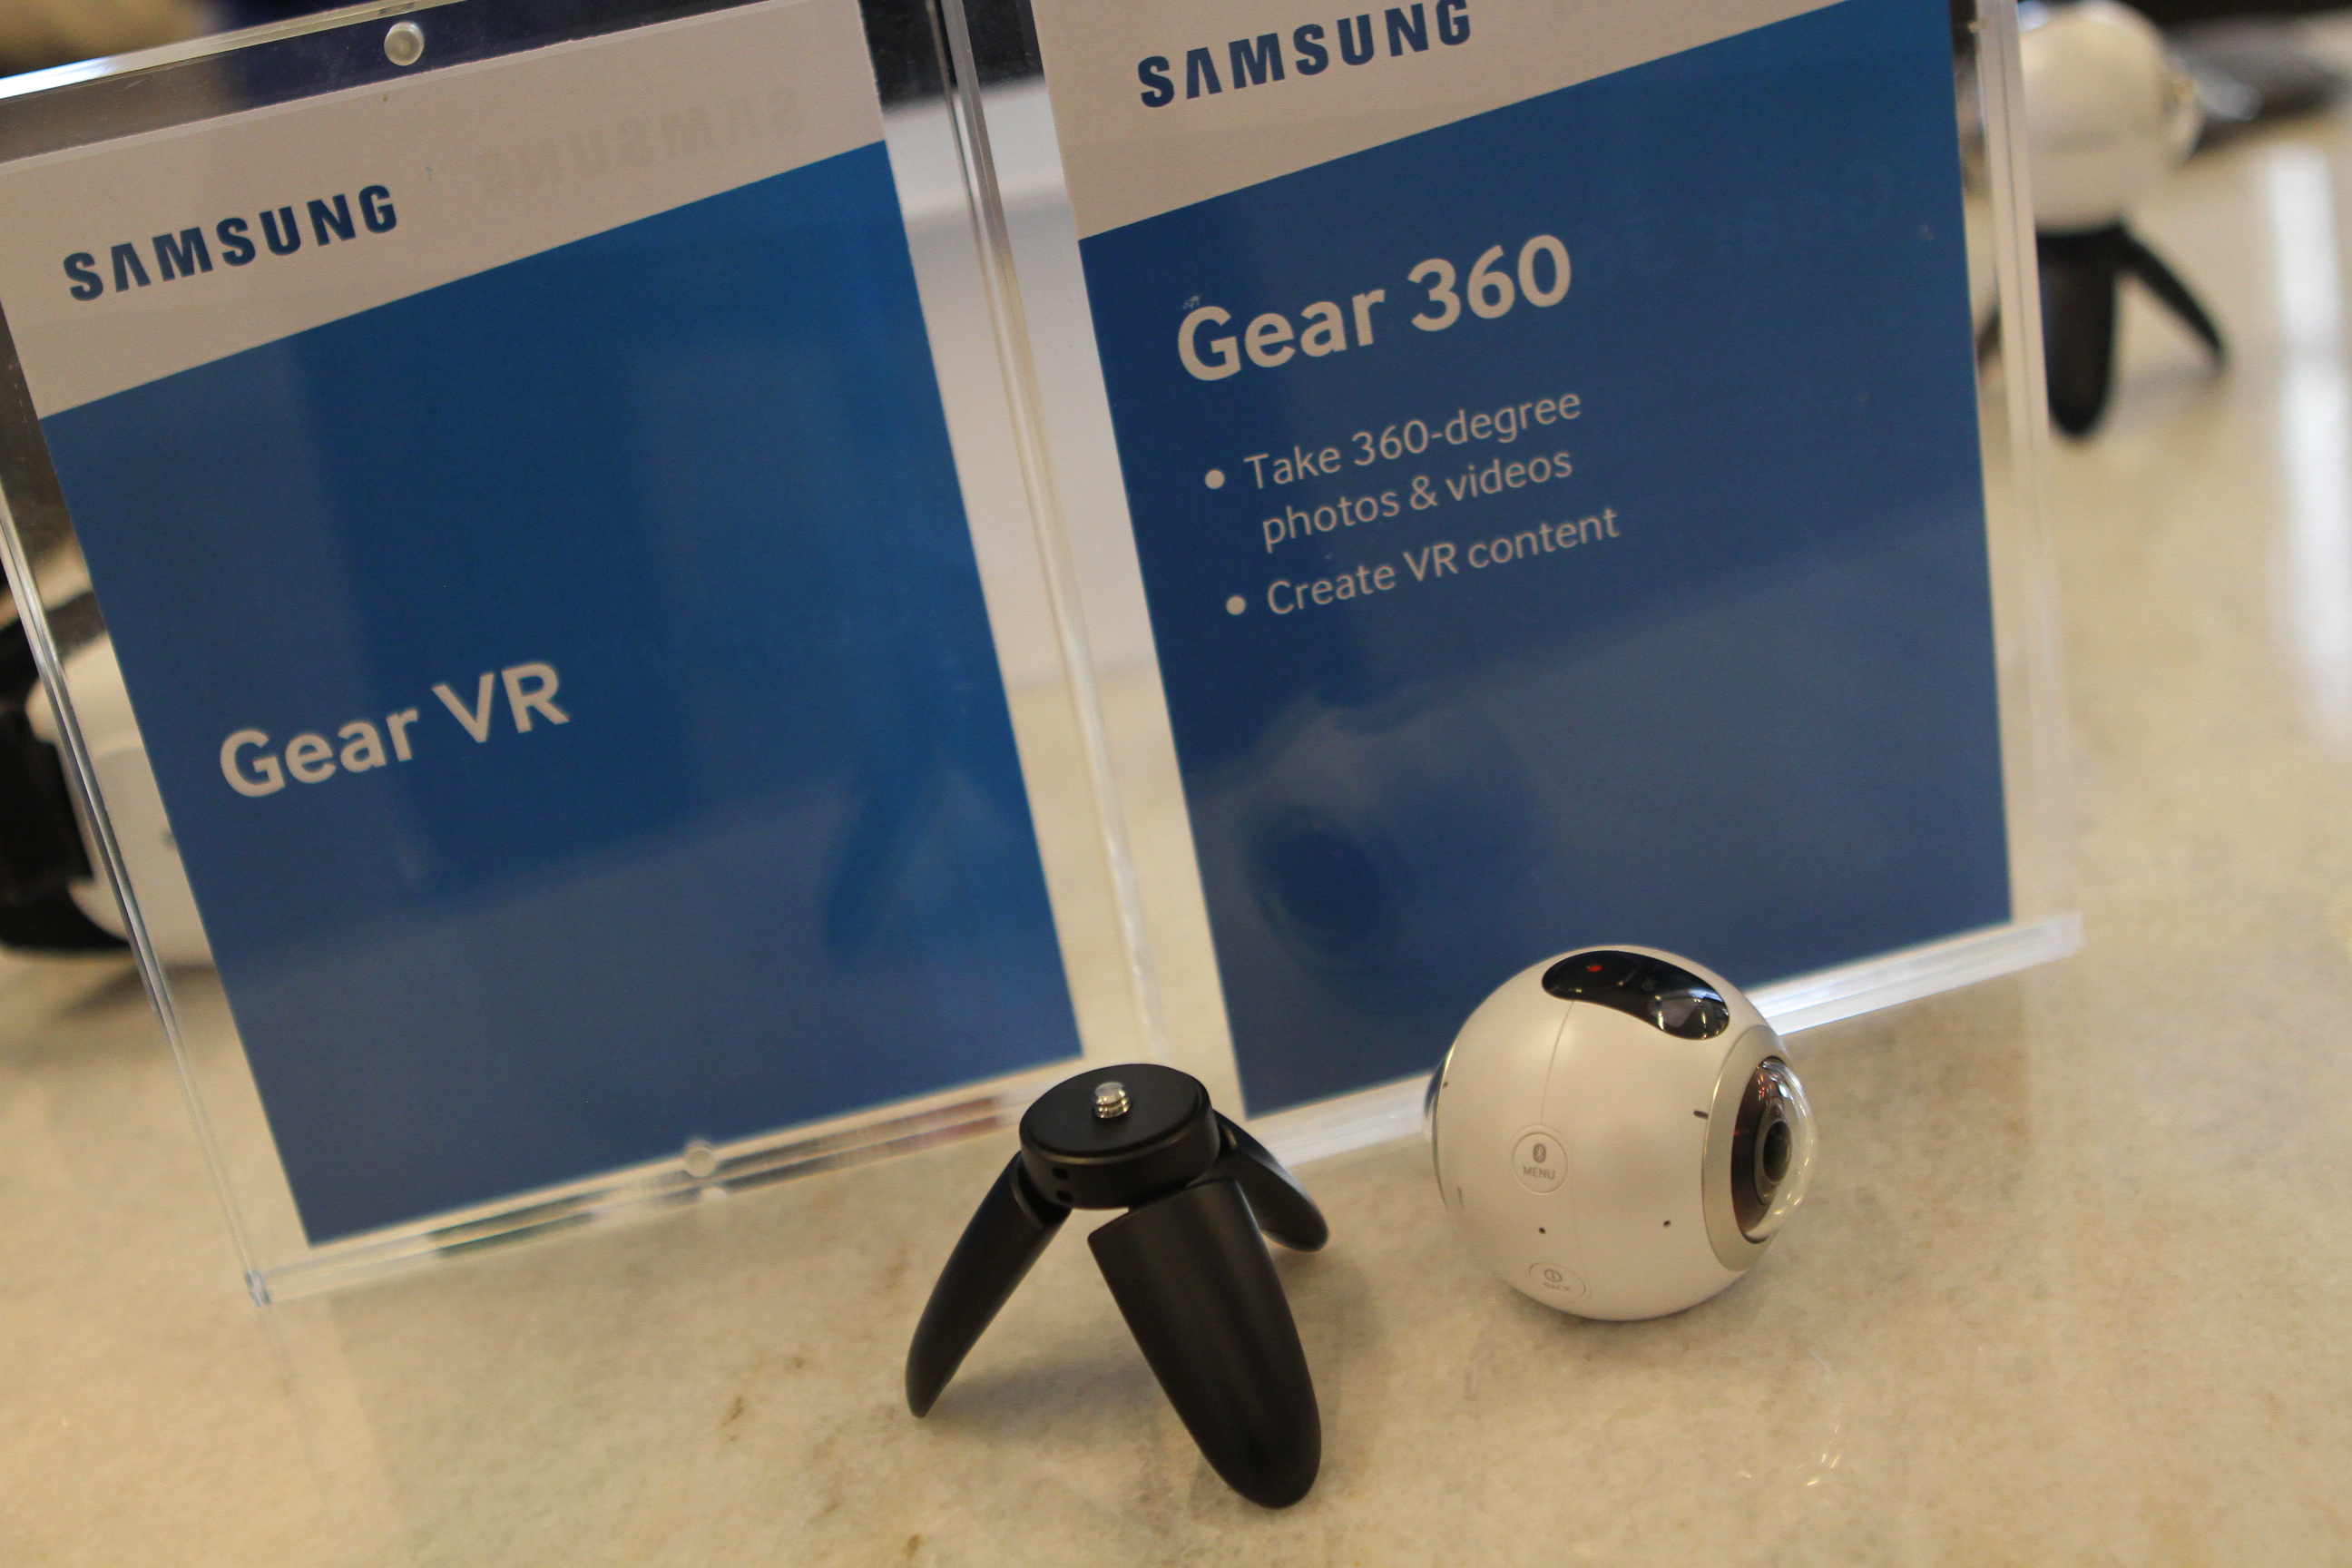 Samsung Gear 360 camera and signage